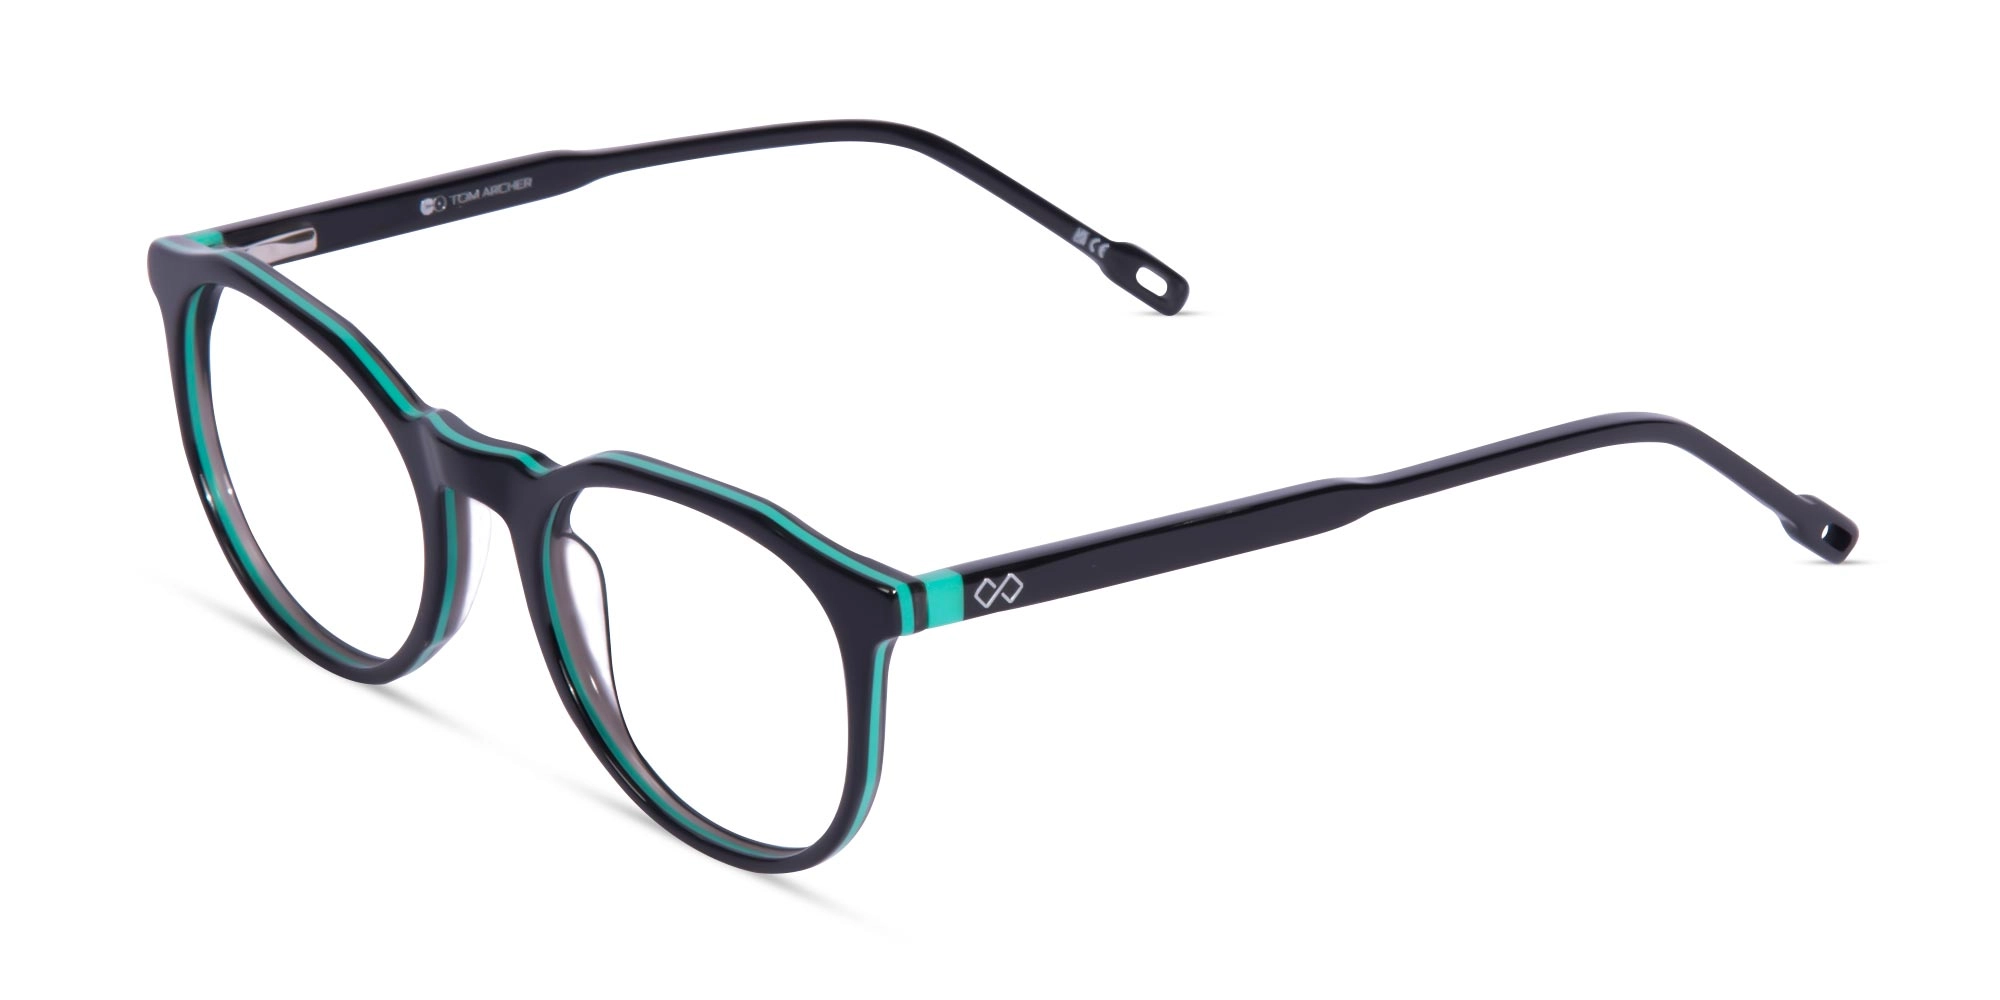 Black Acetate Round Frame Glasses -1